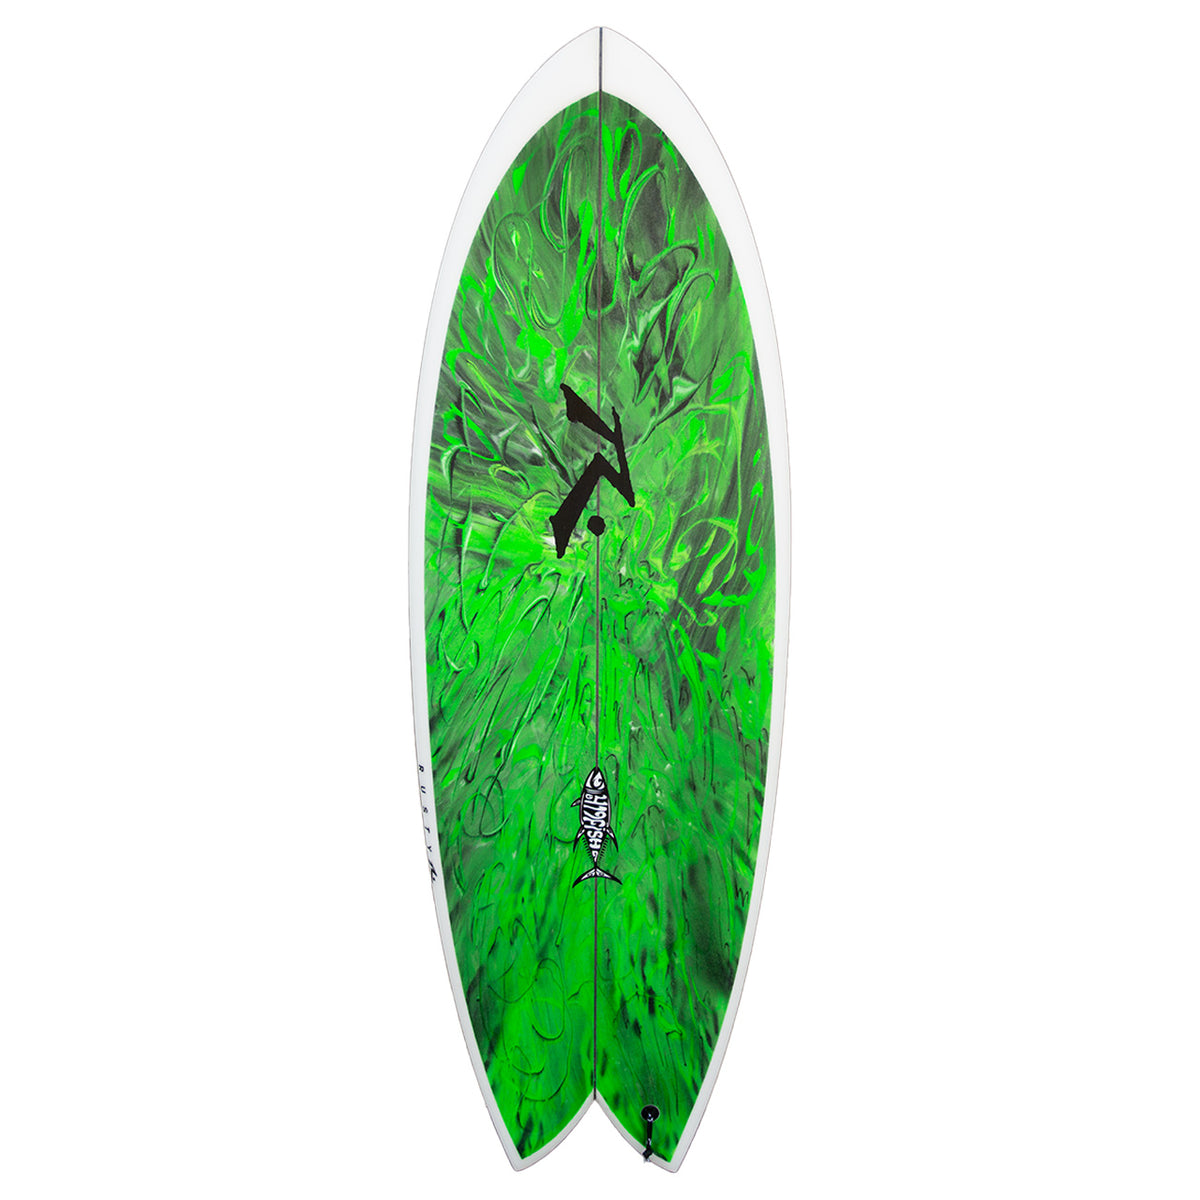 419fish - Alternative - Rusty Surfboards - Top View - Green Swirl